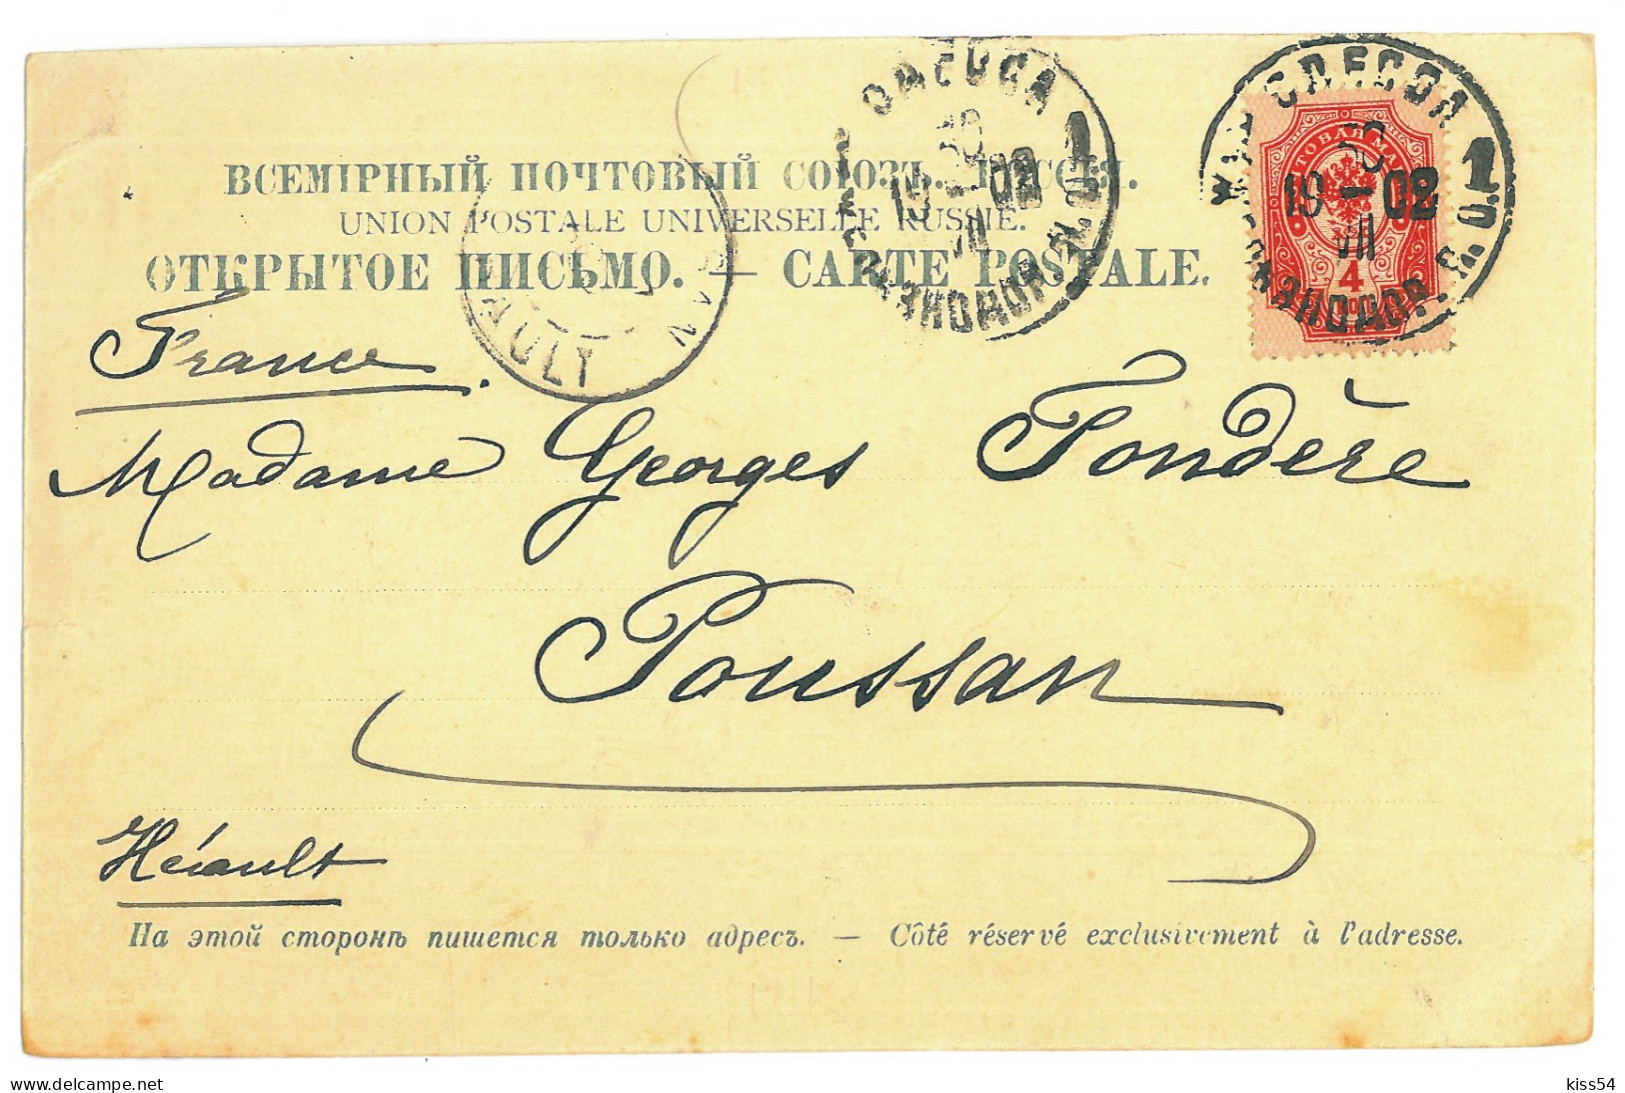 UK 37 - 22609 ODESSA, Sanatorium, Litho, Ukraine - Old Postcard - Used - 1902 - Ukraine